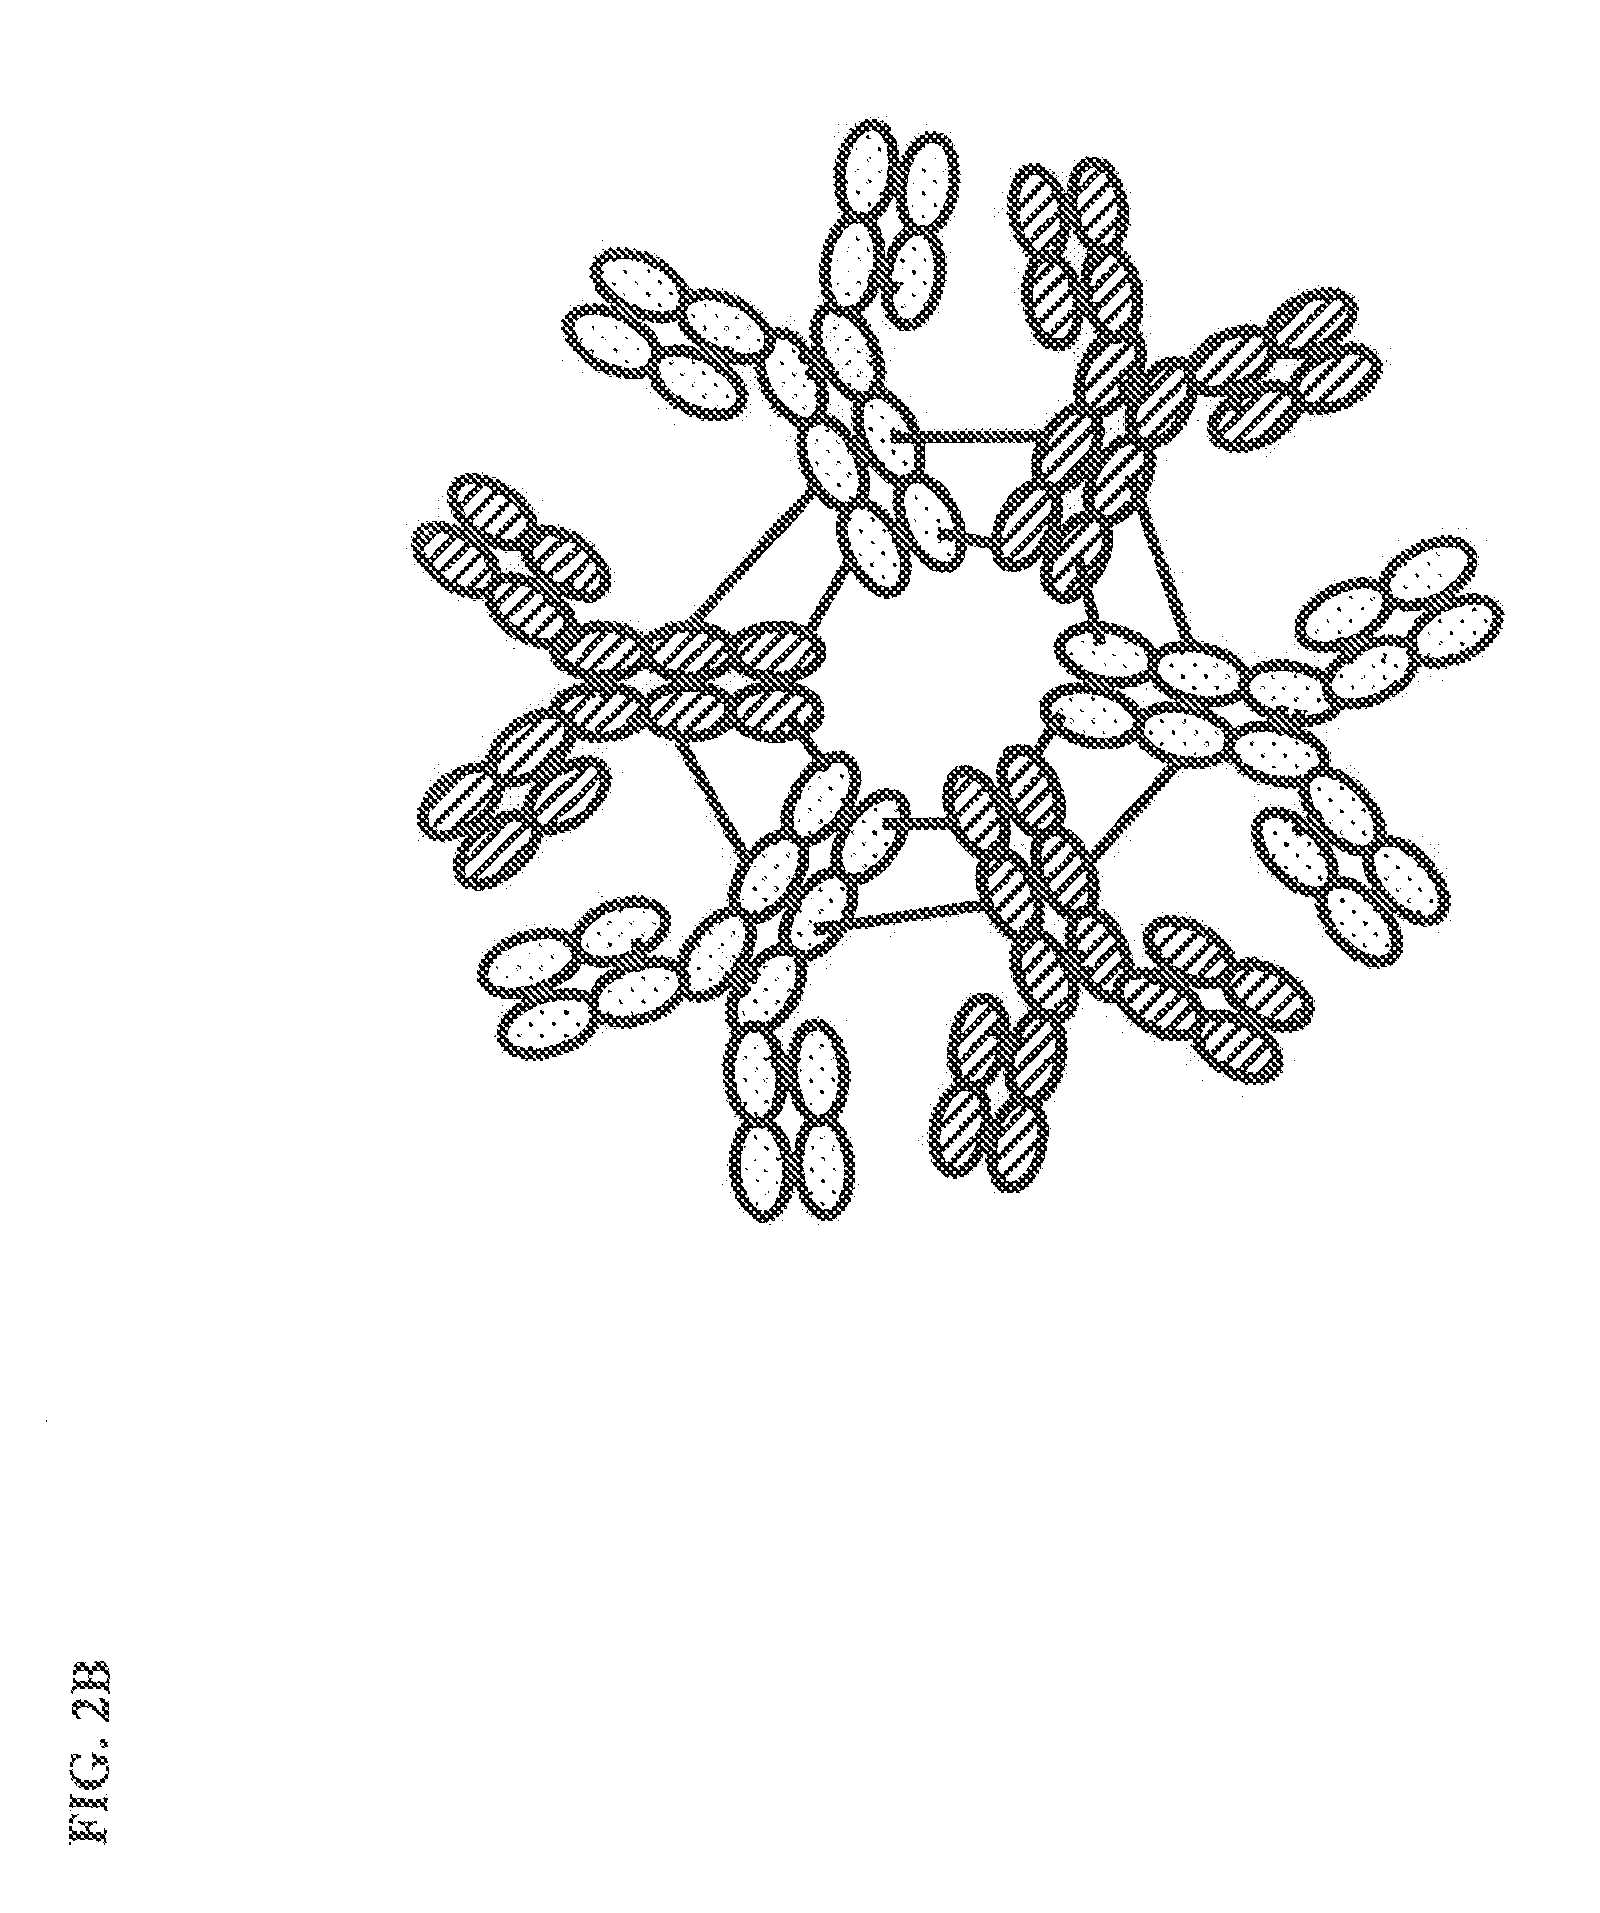 Constant chain modified bispecific, penta- and hexavalent ig-m antibodies